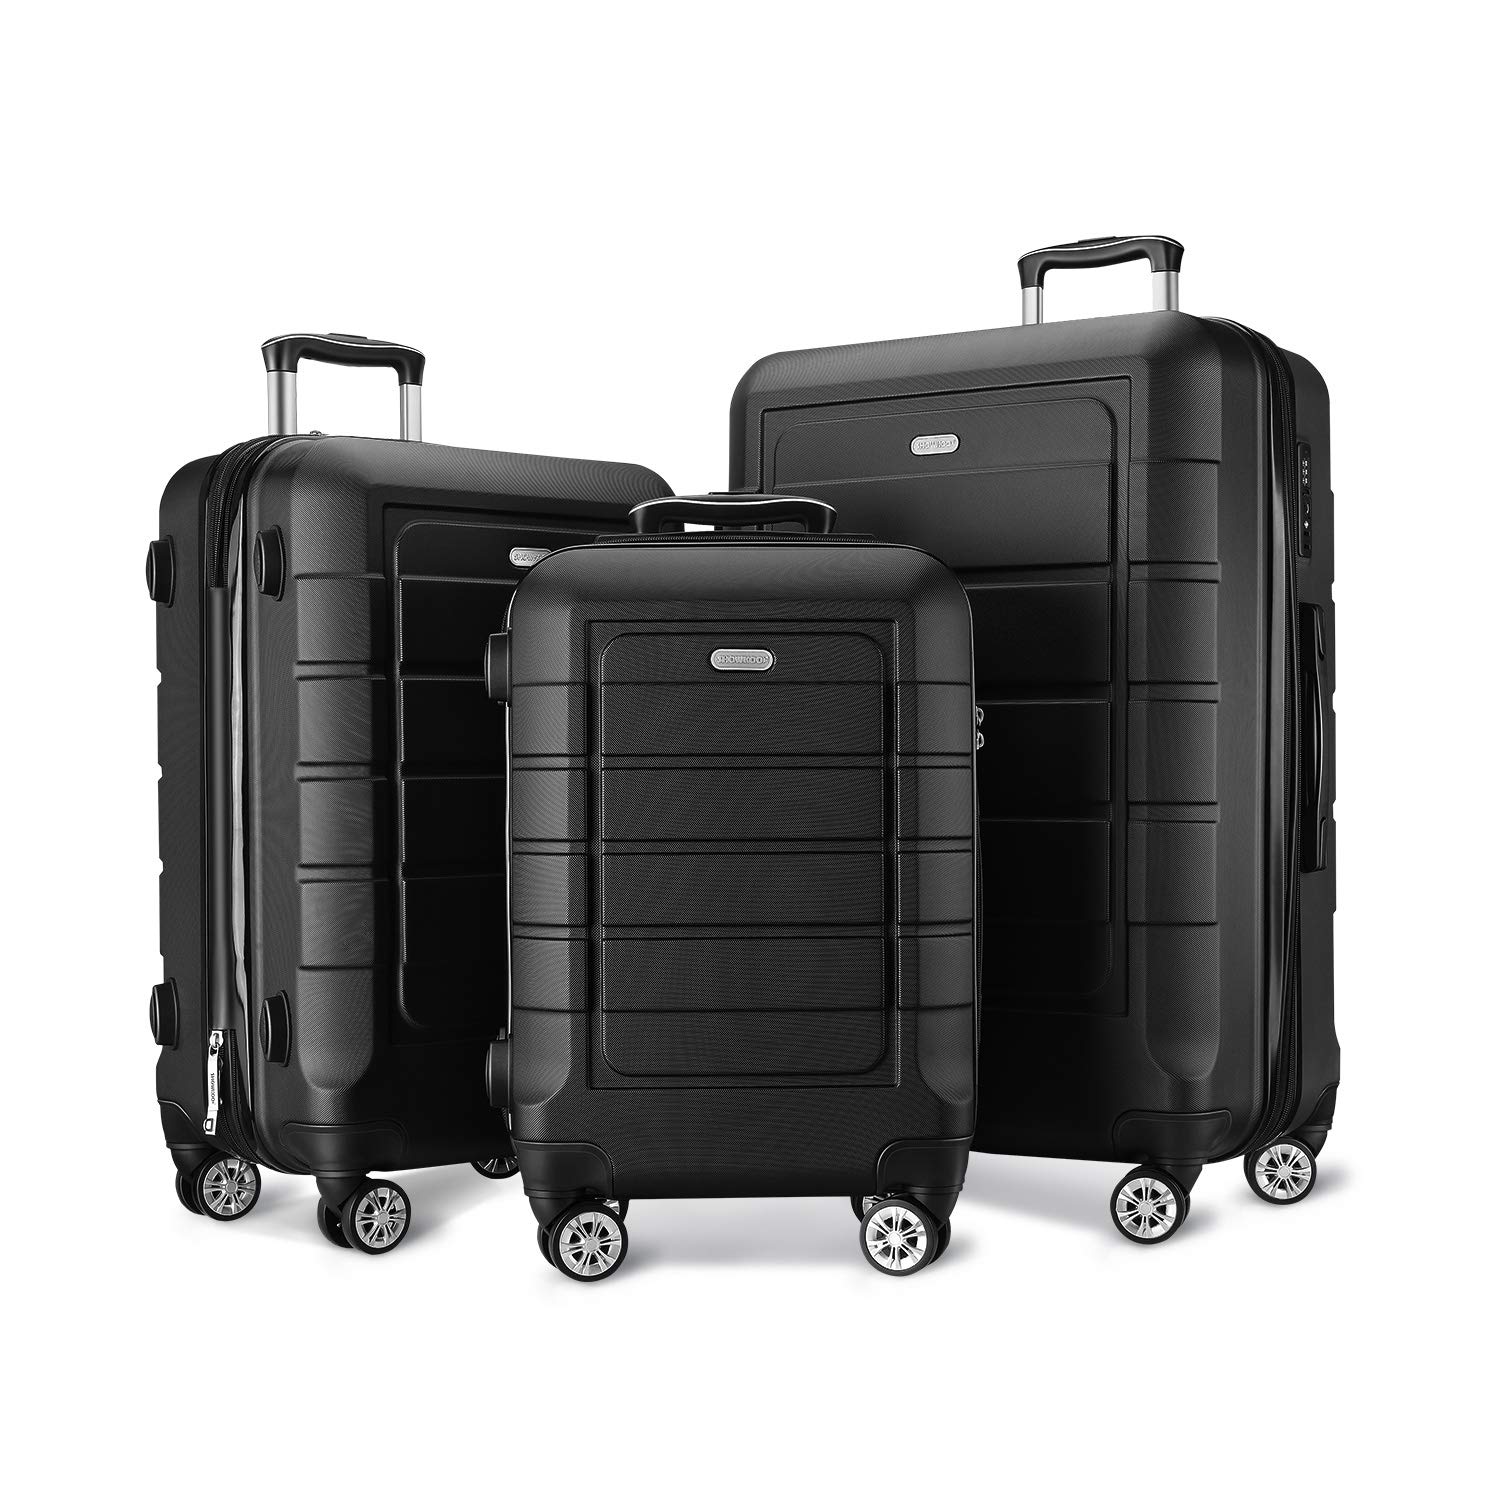 SHOWKOO Multidirectional Adjustable Affordable Luggage Set, 3-Piece